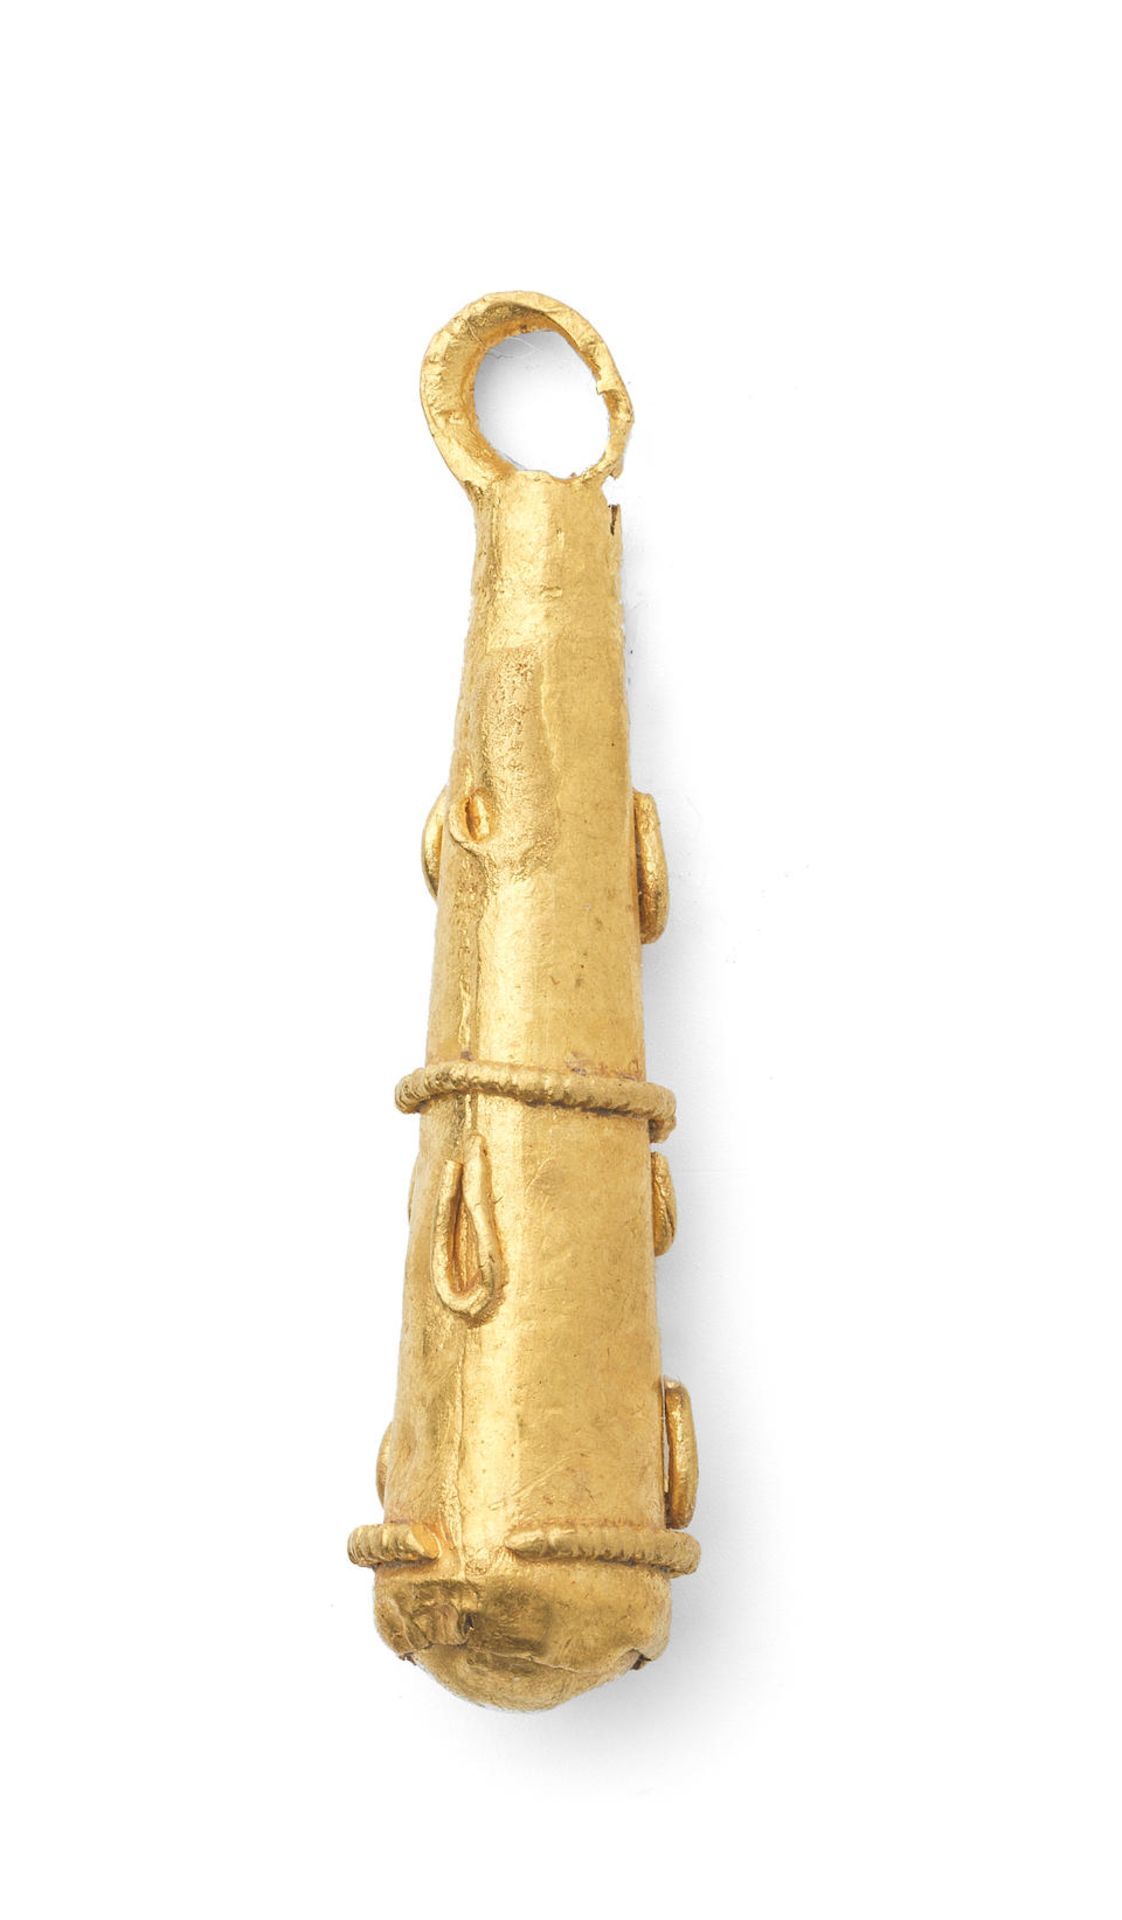 A Roman gold Hercules's club pendant